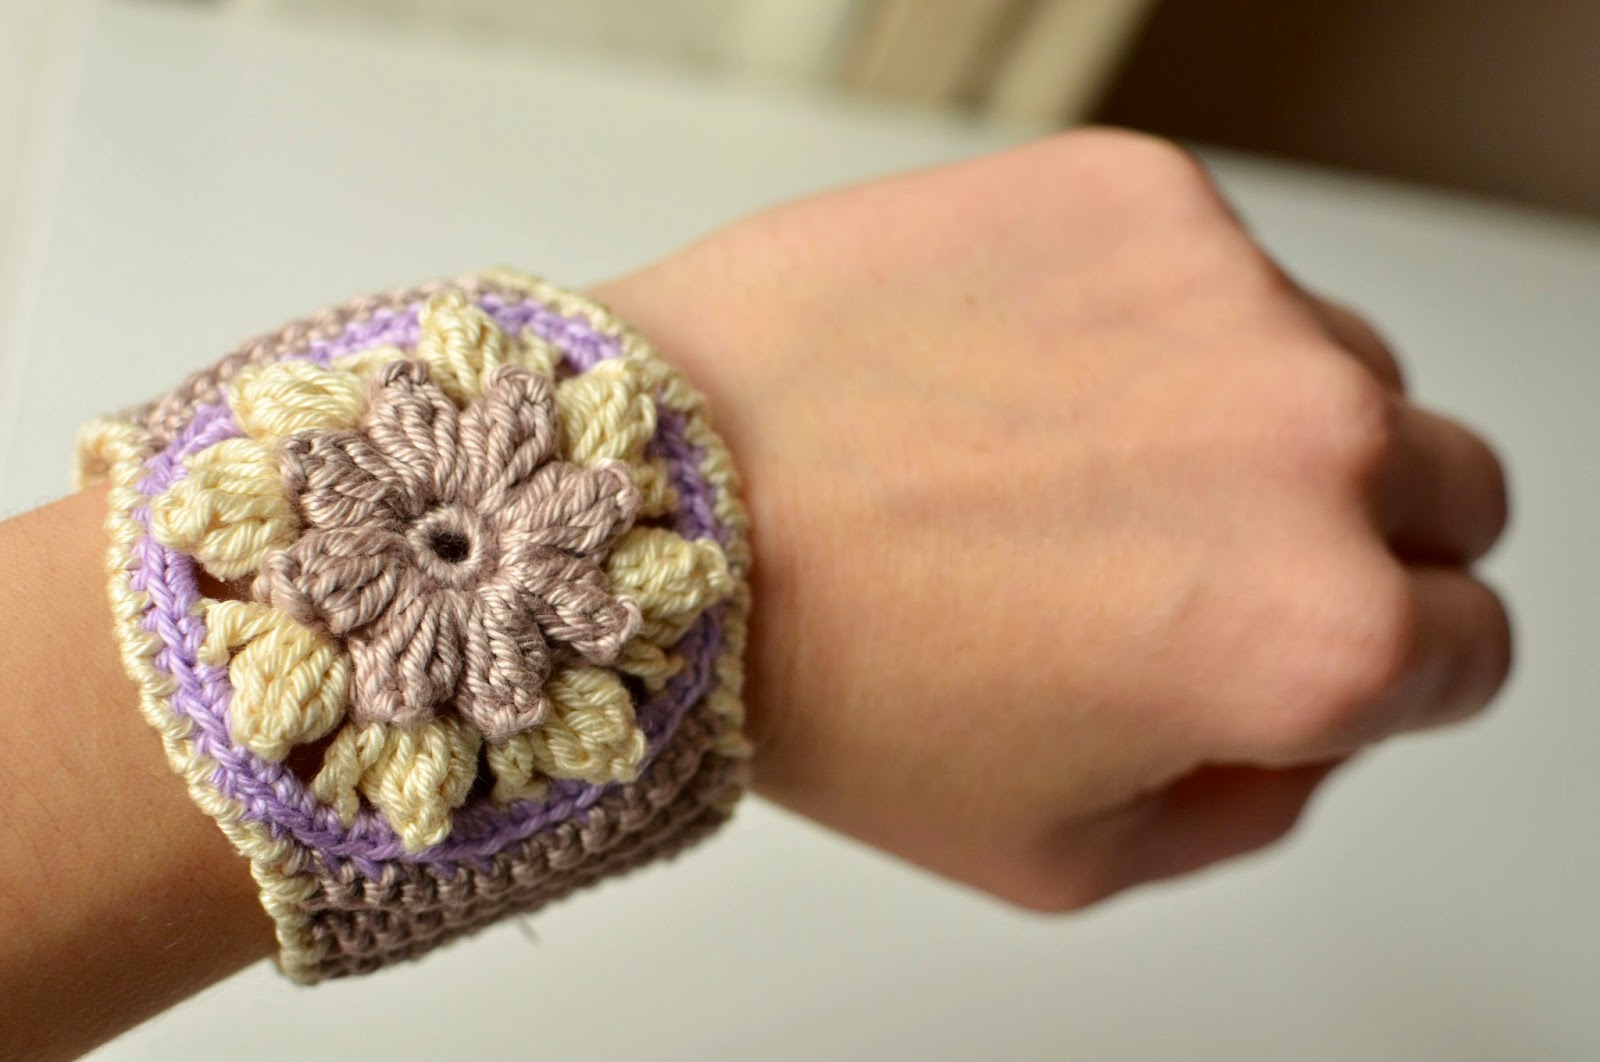 Crocheted bracelet with popcorn stitches